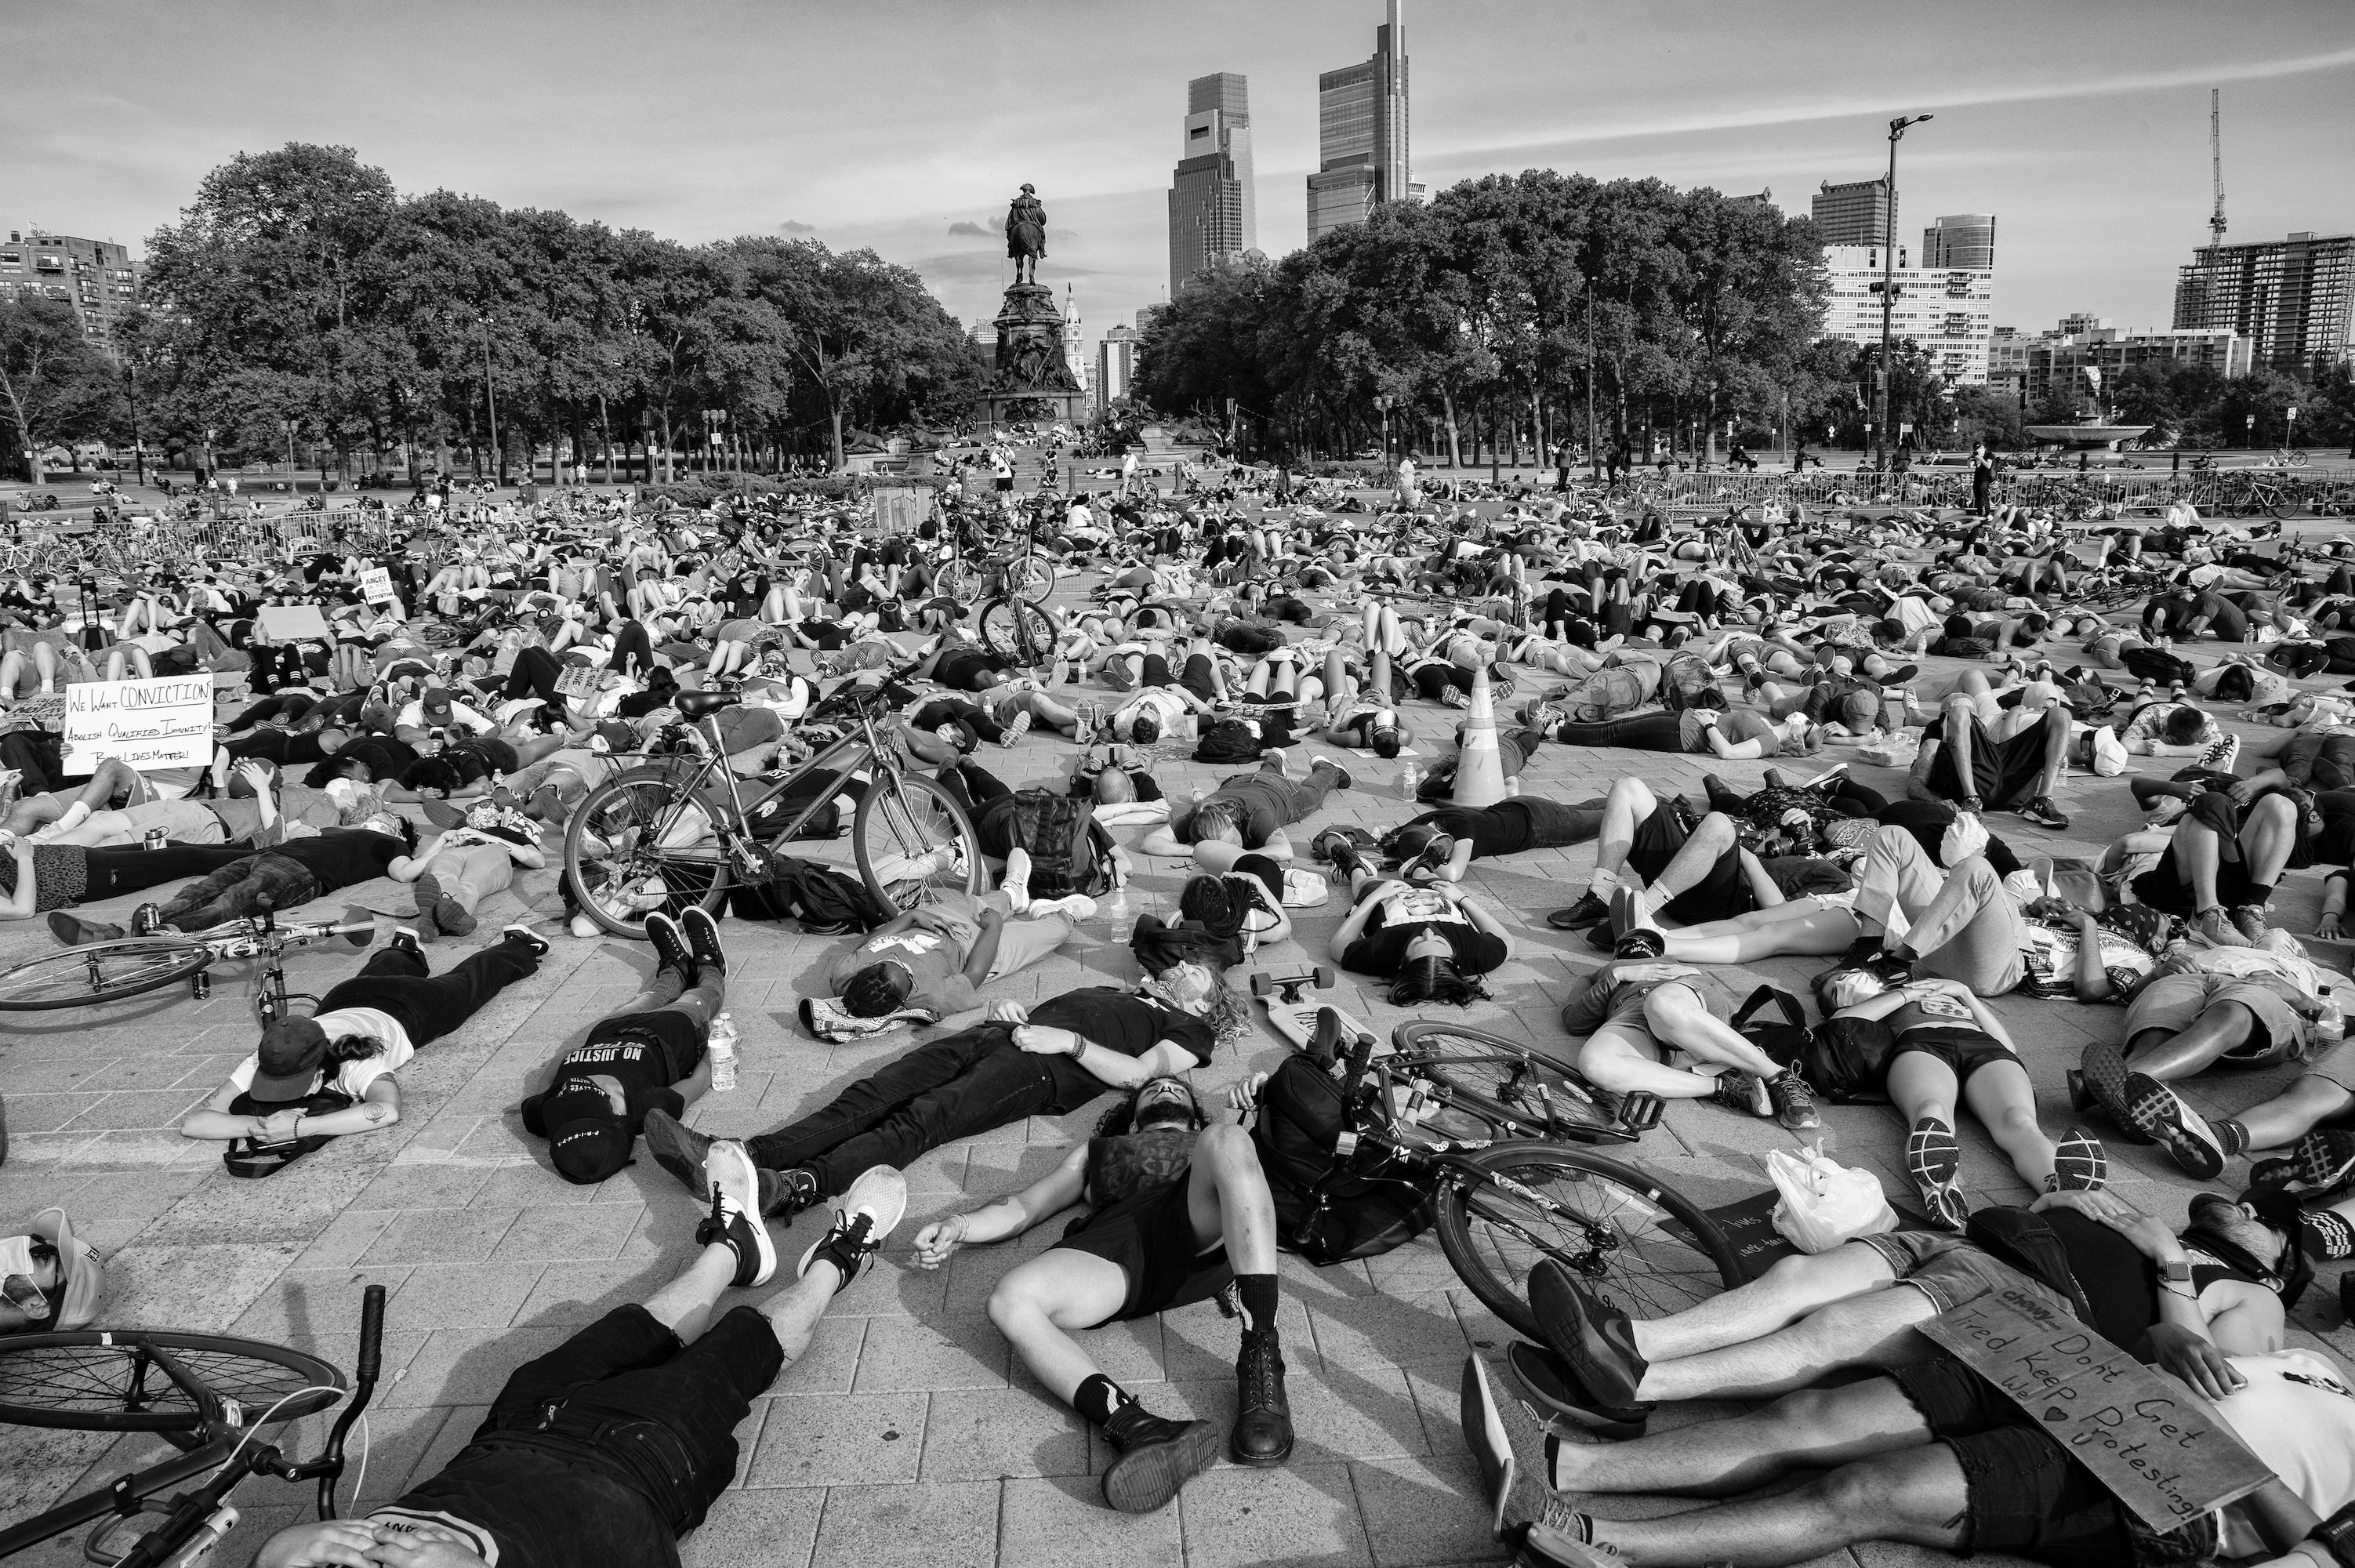 Ada Trillo Figurative Photograph - Peaceful Protest, Philadelphia: Black Lives Matter city documentary photograph